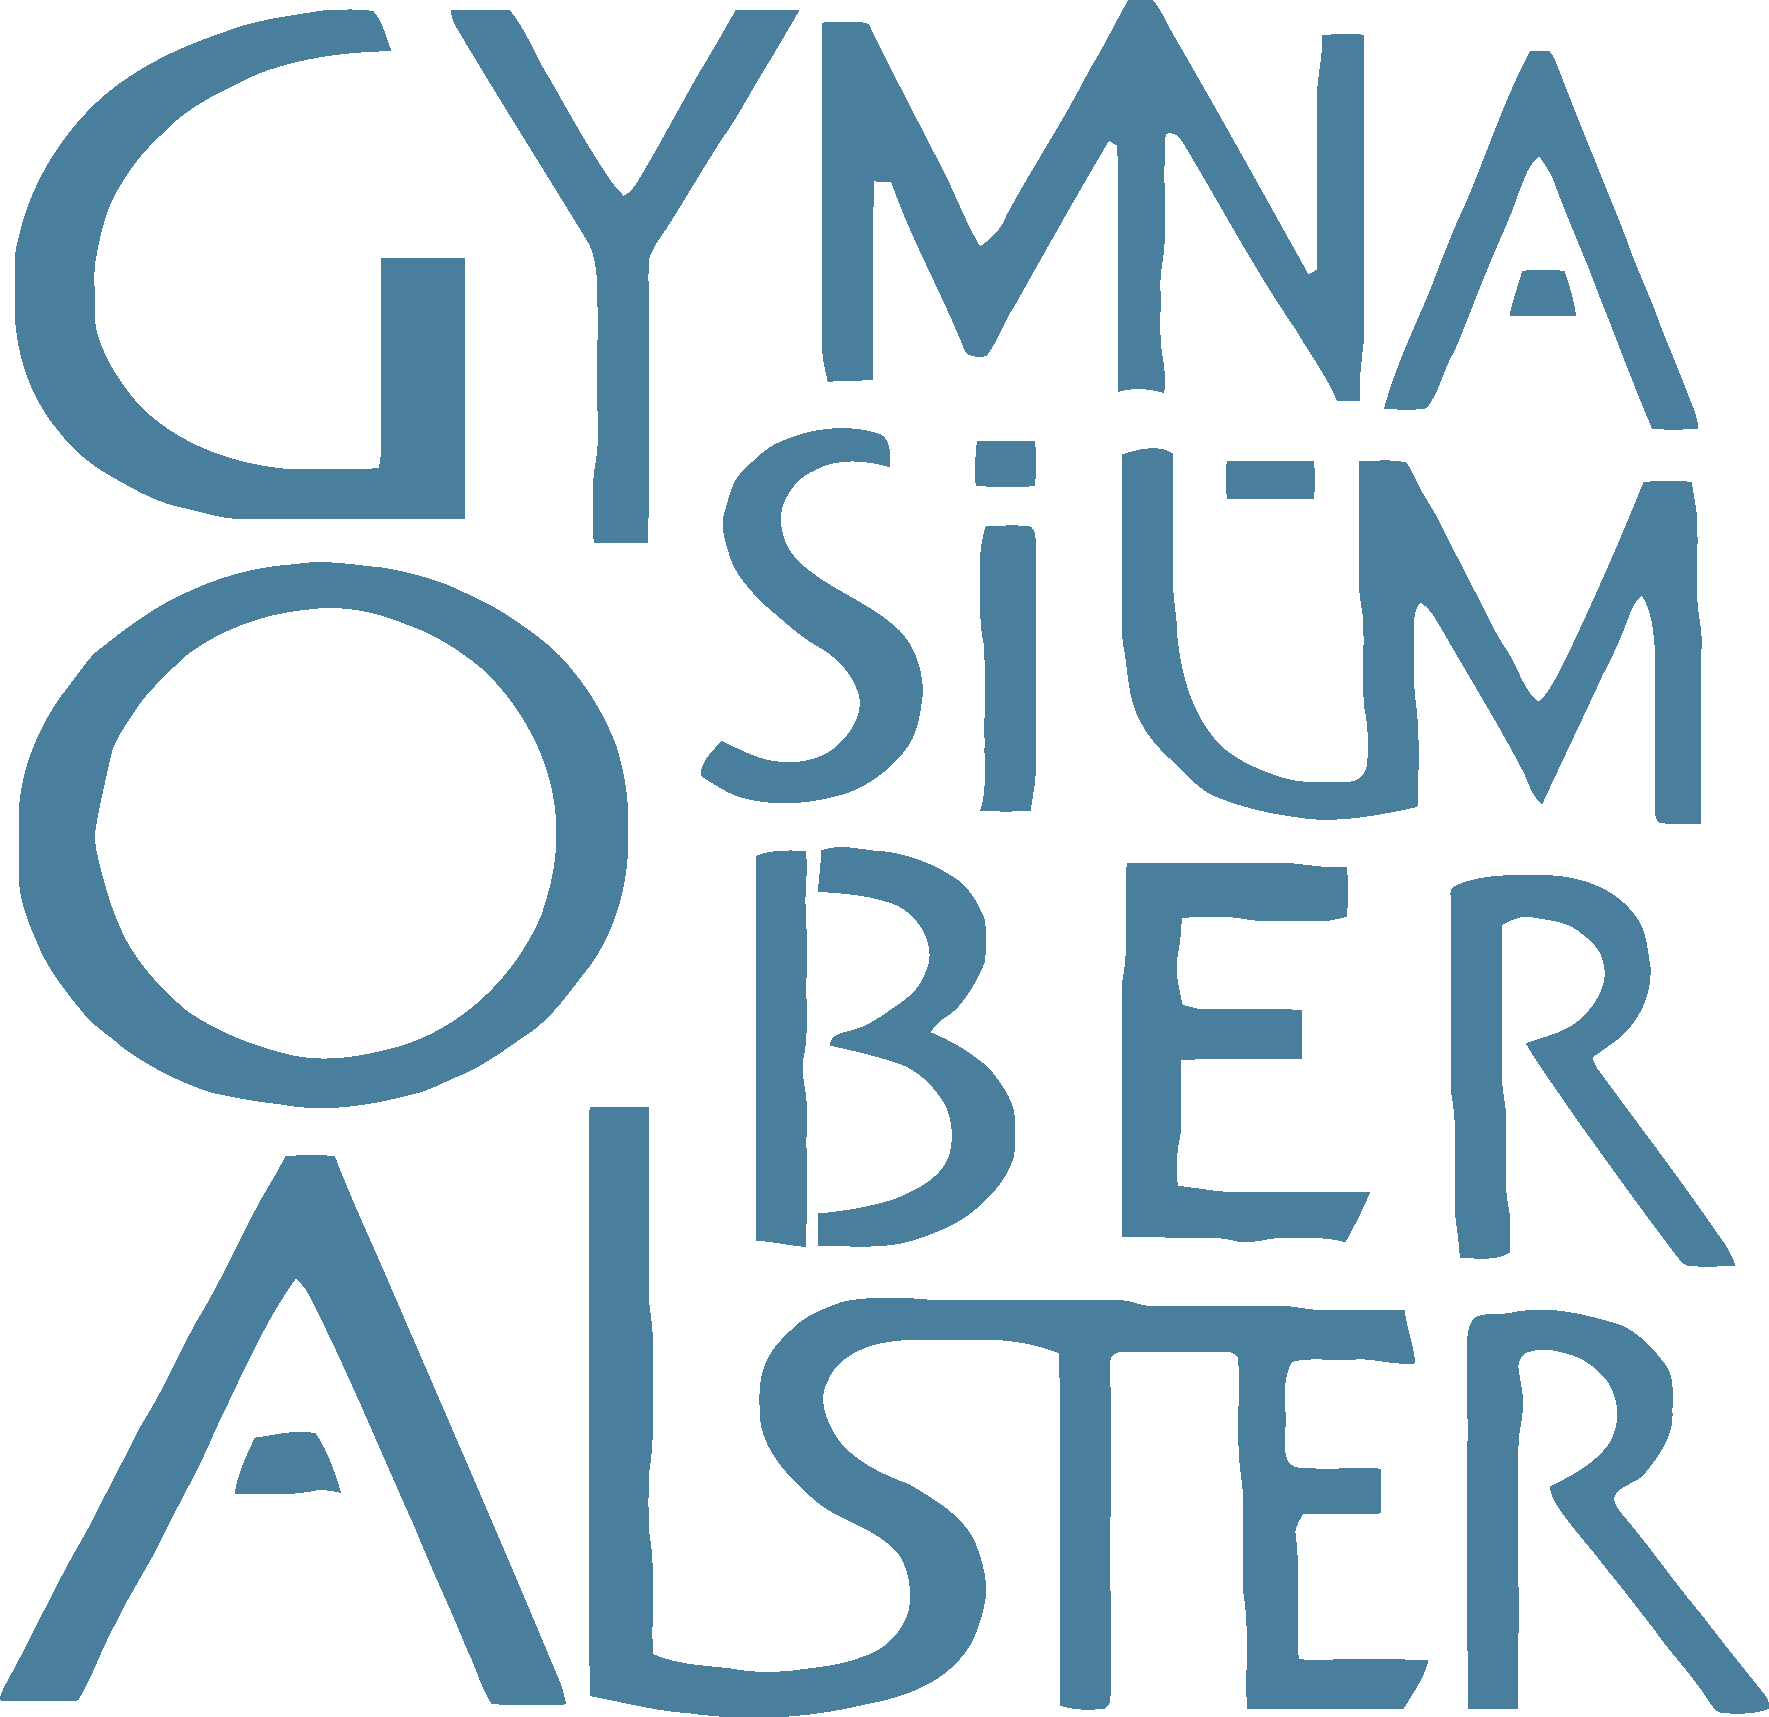 Gymnasium Oberalster logo